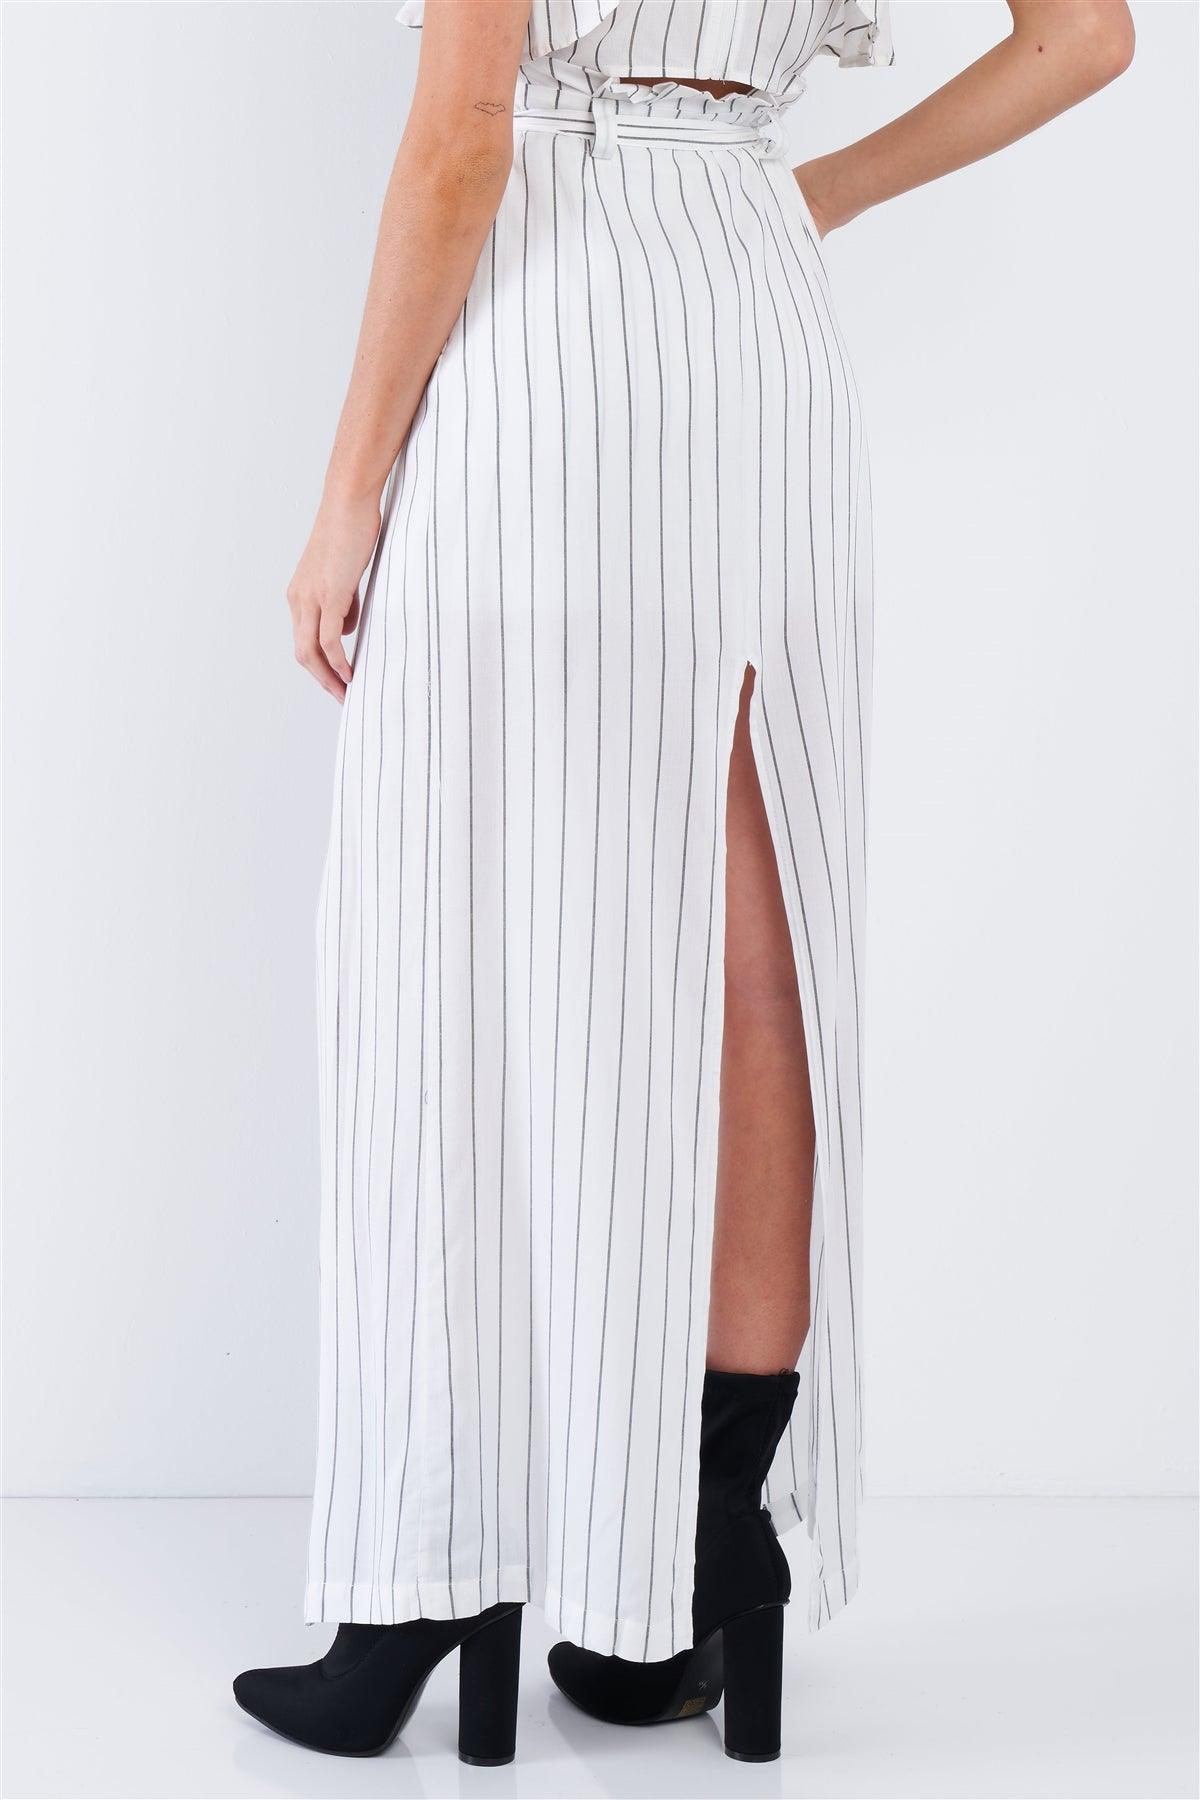 White & Grey Stripe Halter Crop Top and High Waist Frill Mock Maxi Skirt Skort Set    /1-3-2